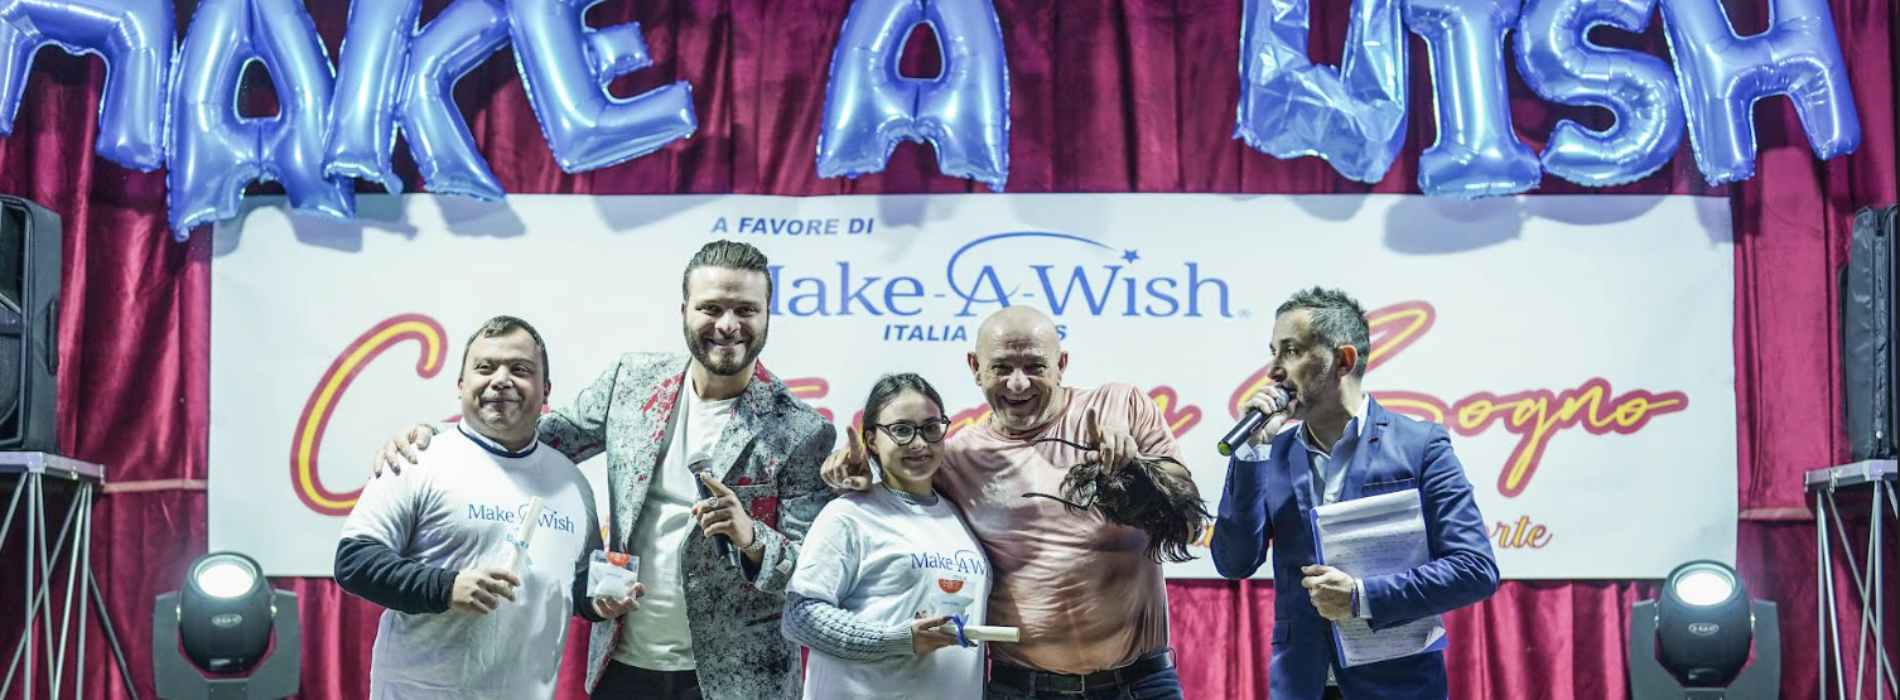 Make A Wish, 6mila euro per i sogni dei bimbi malati